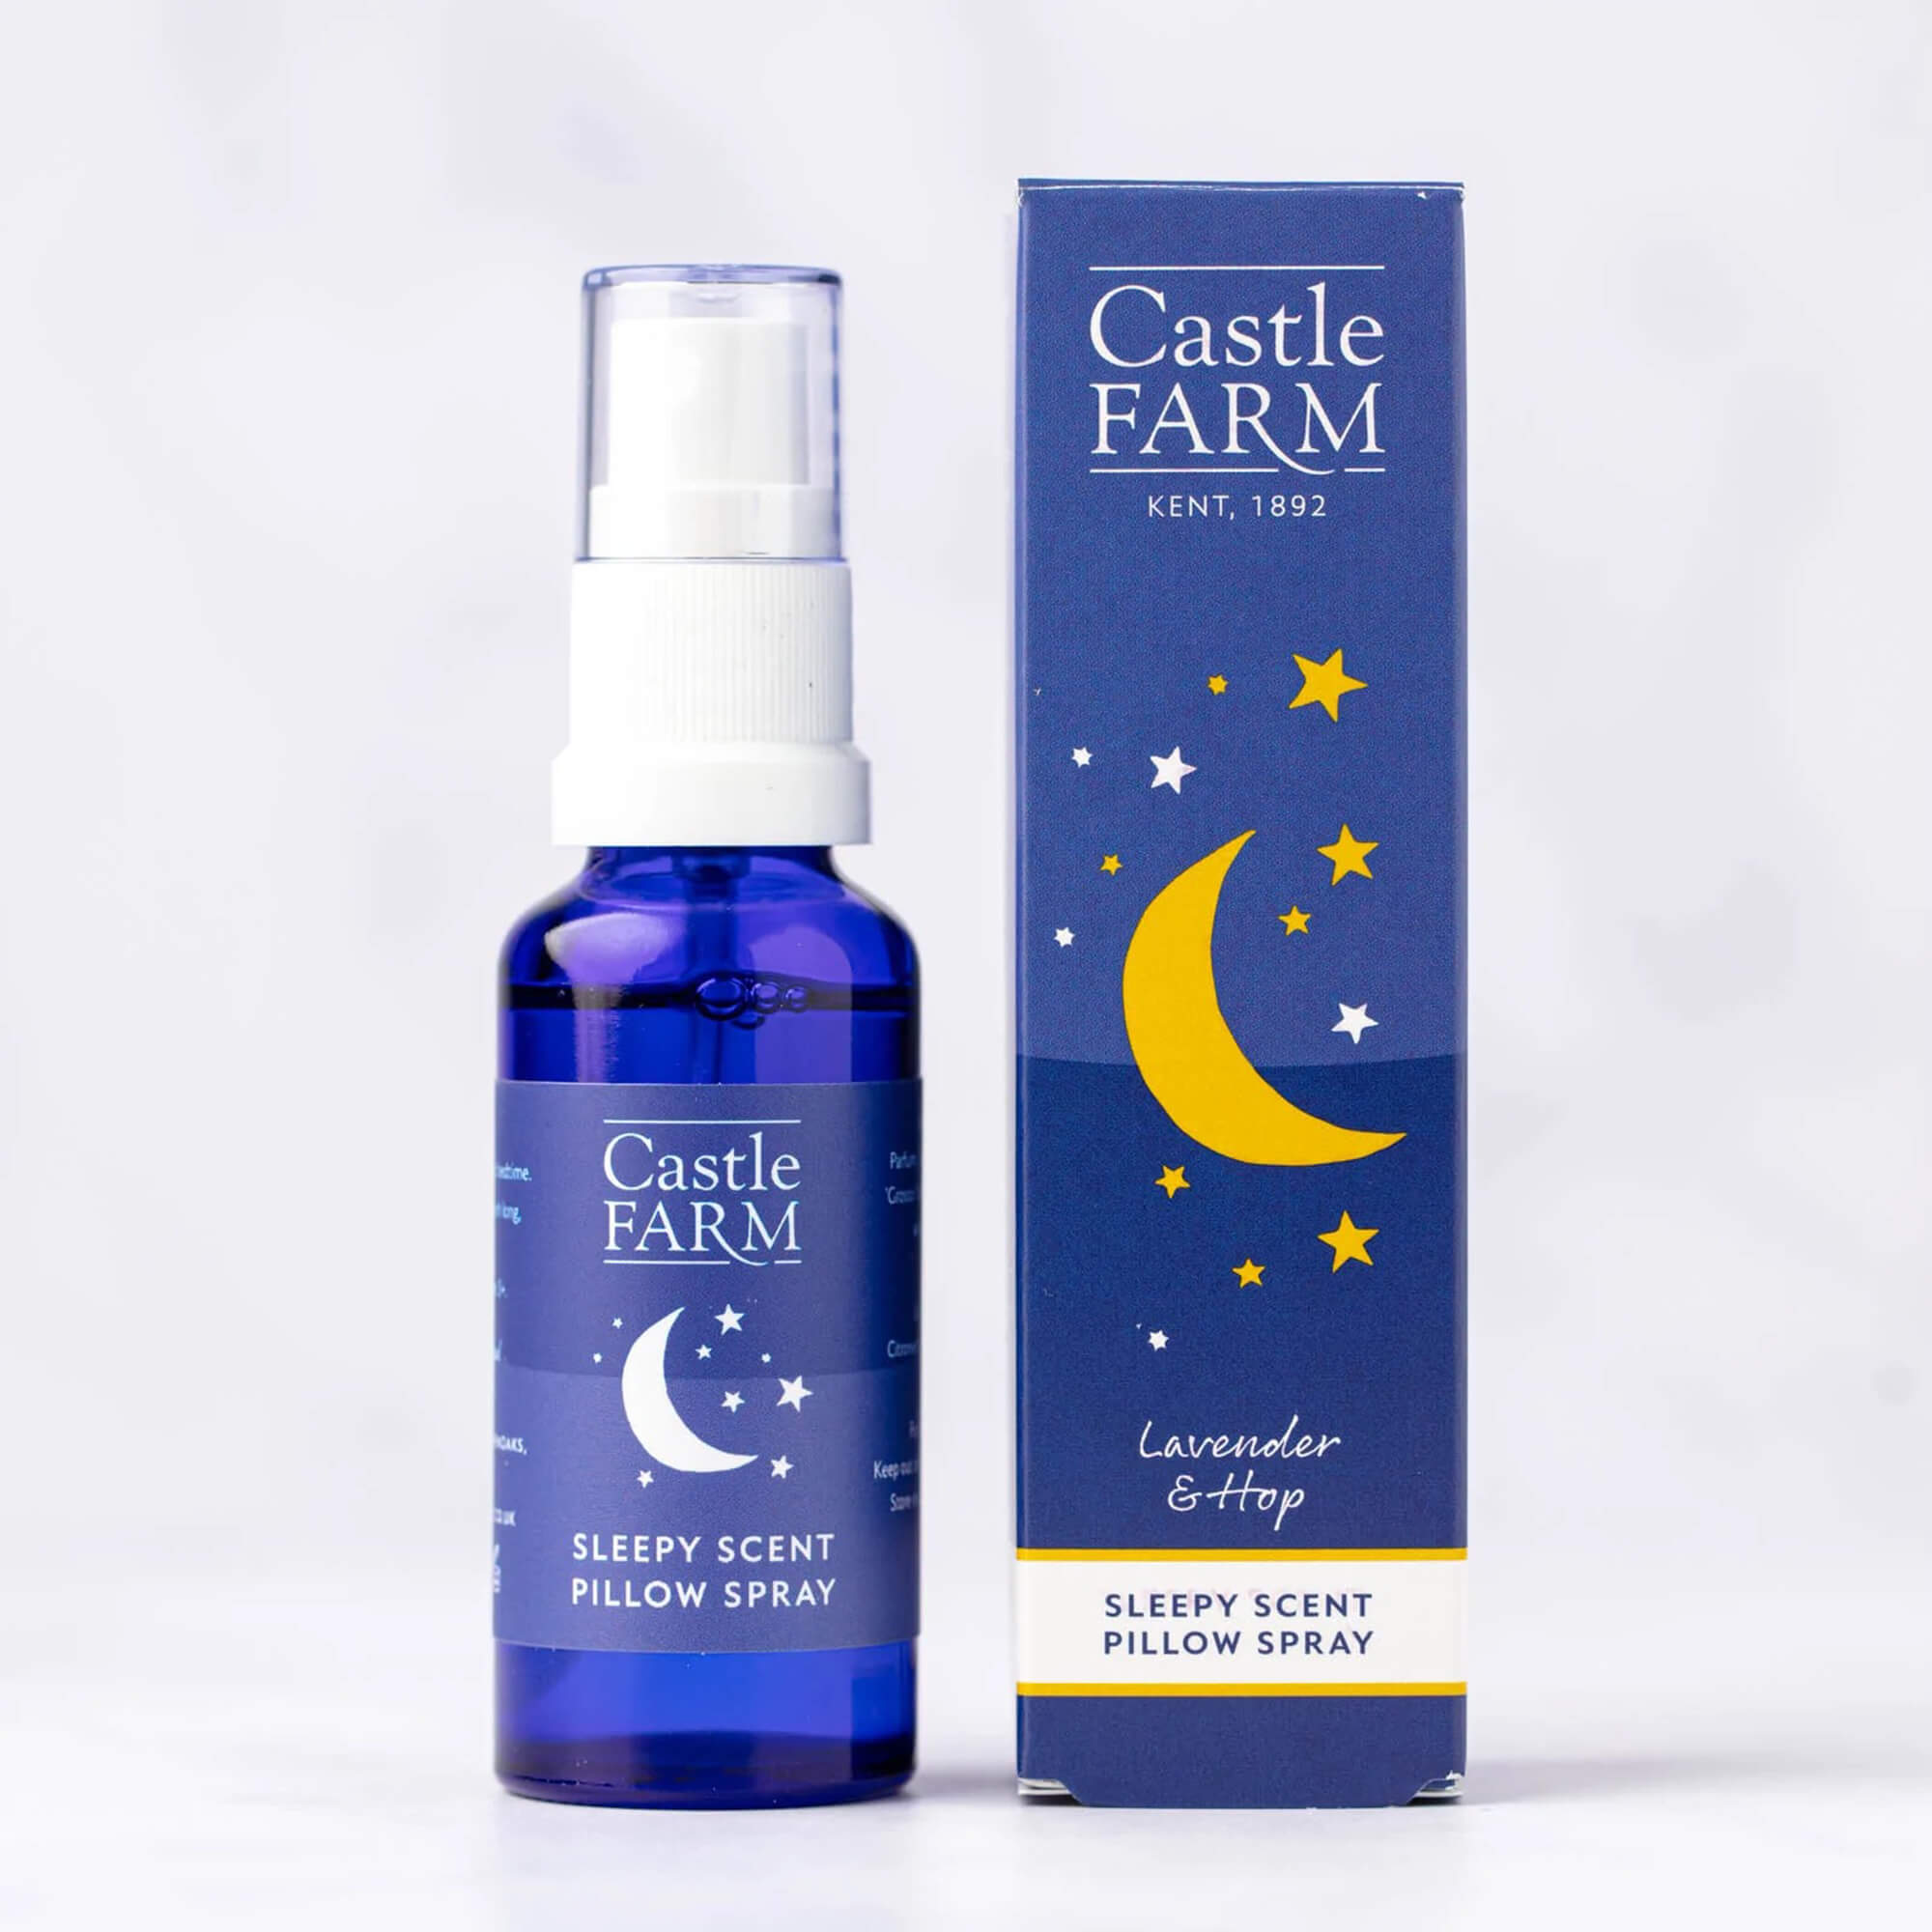 Sleep spray bottle packaging for Castle Farm